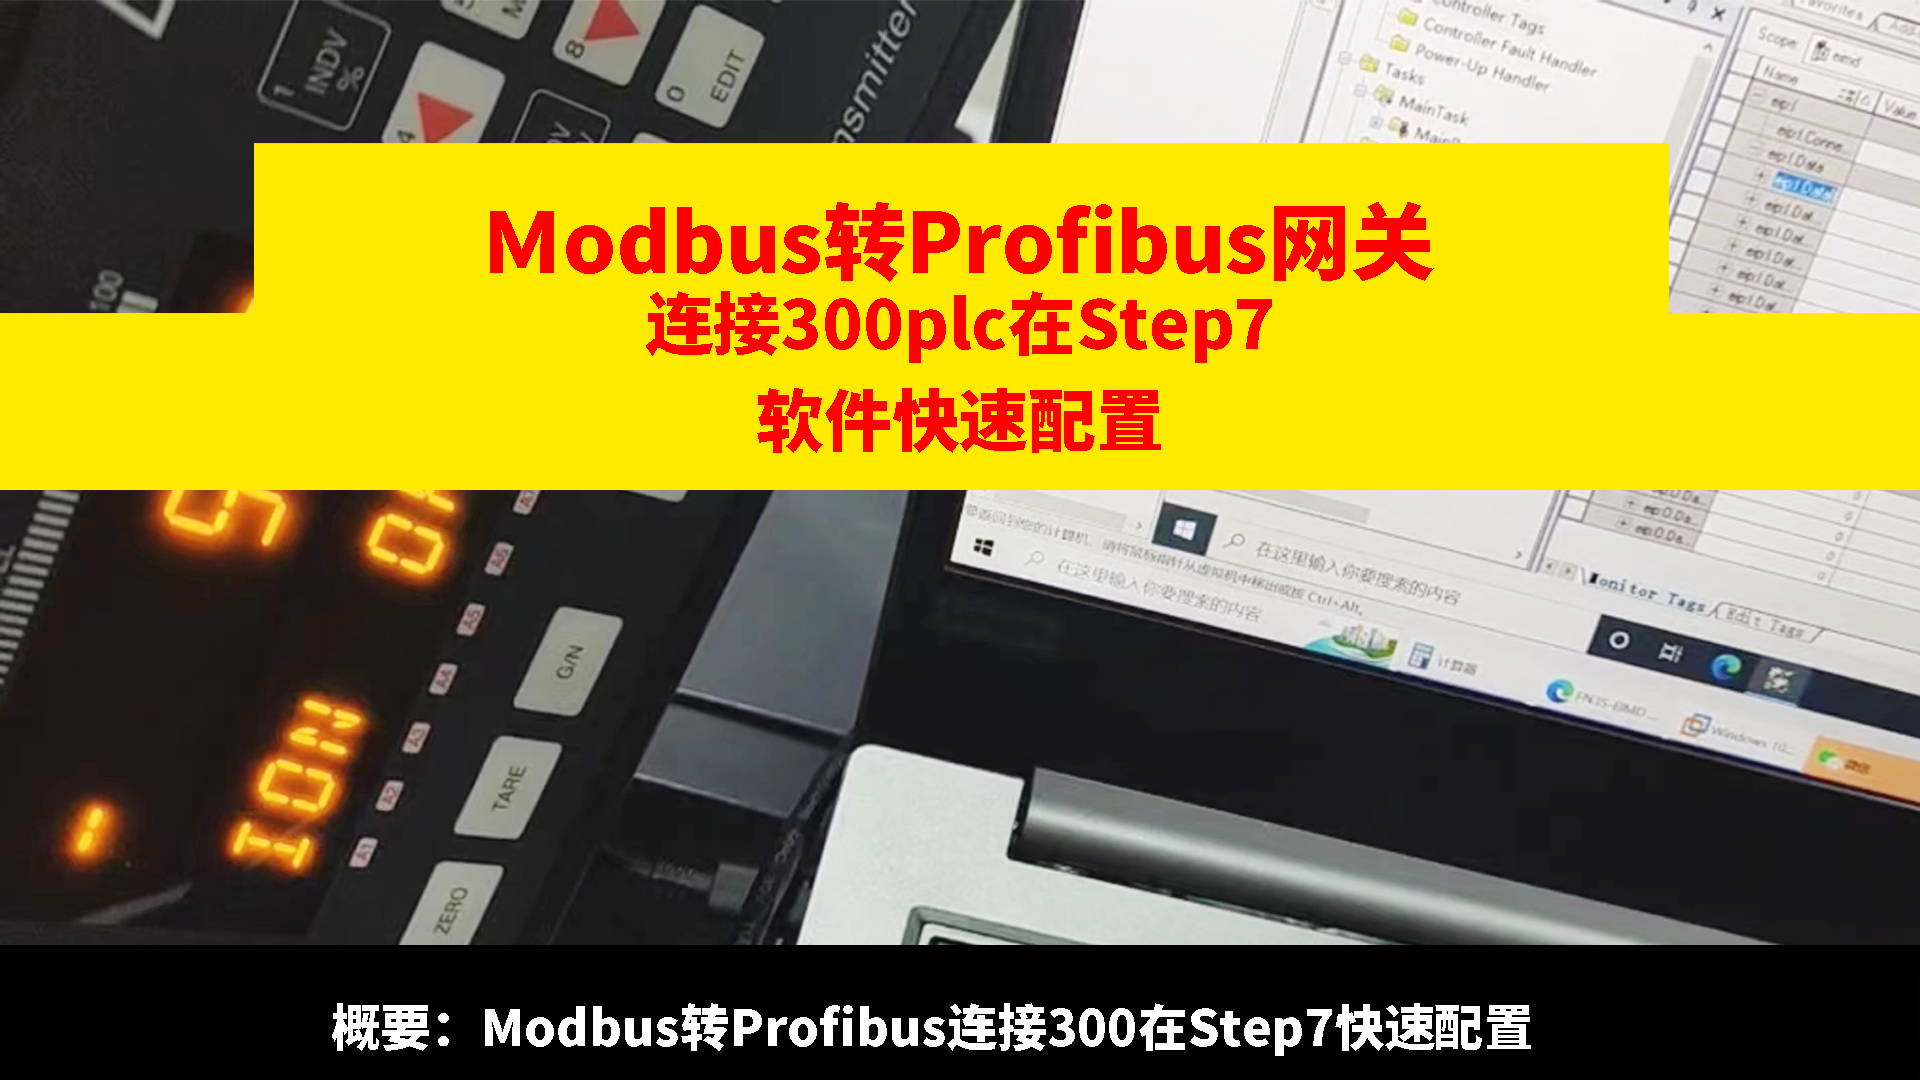 modbus转profibus网关连接PLC在step7软件里快速配置示例# Modbus转Profibus